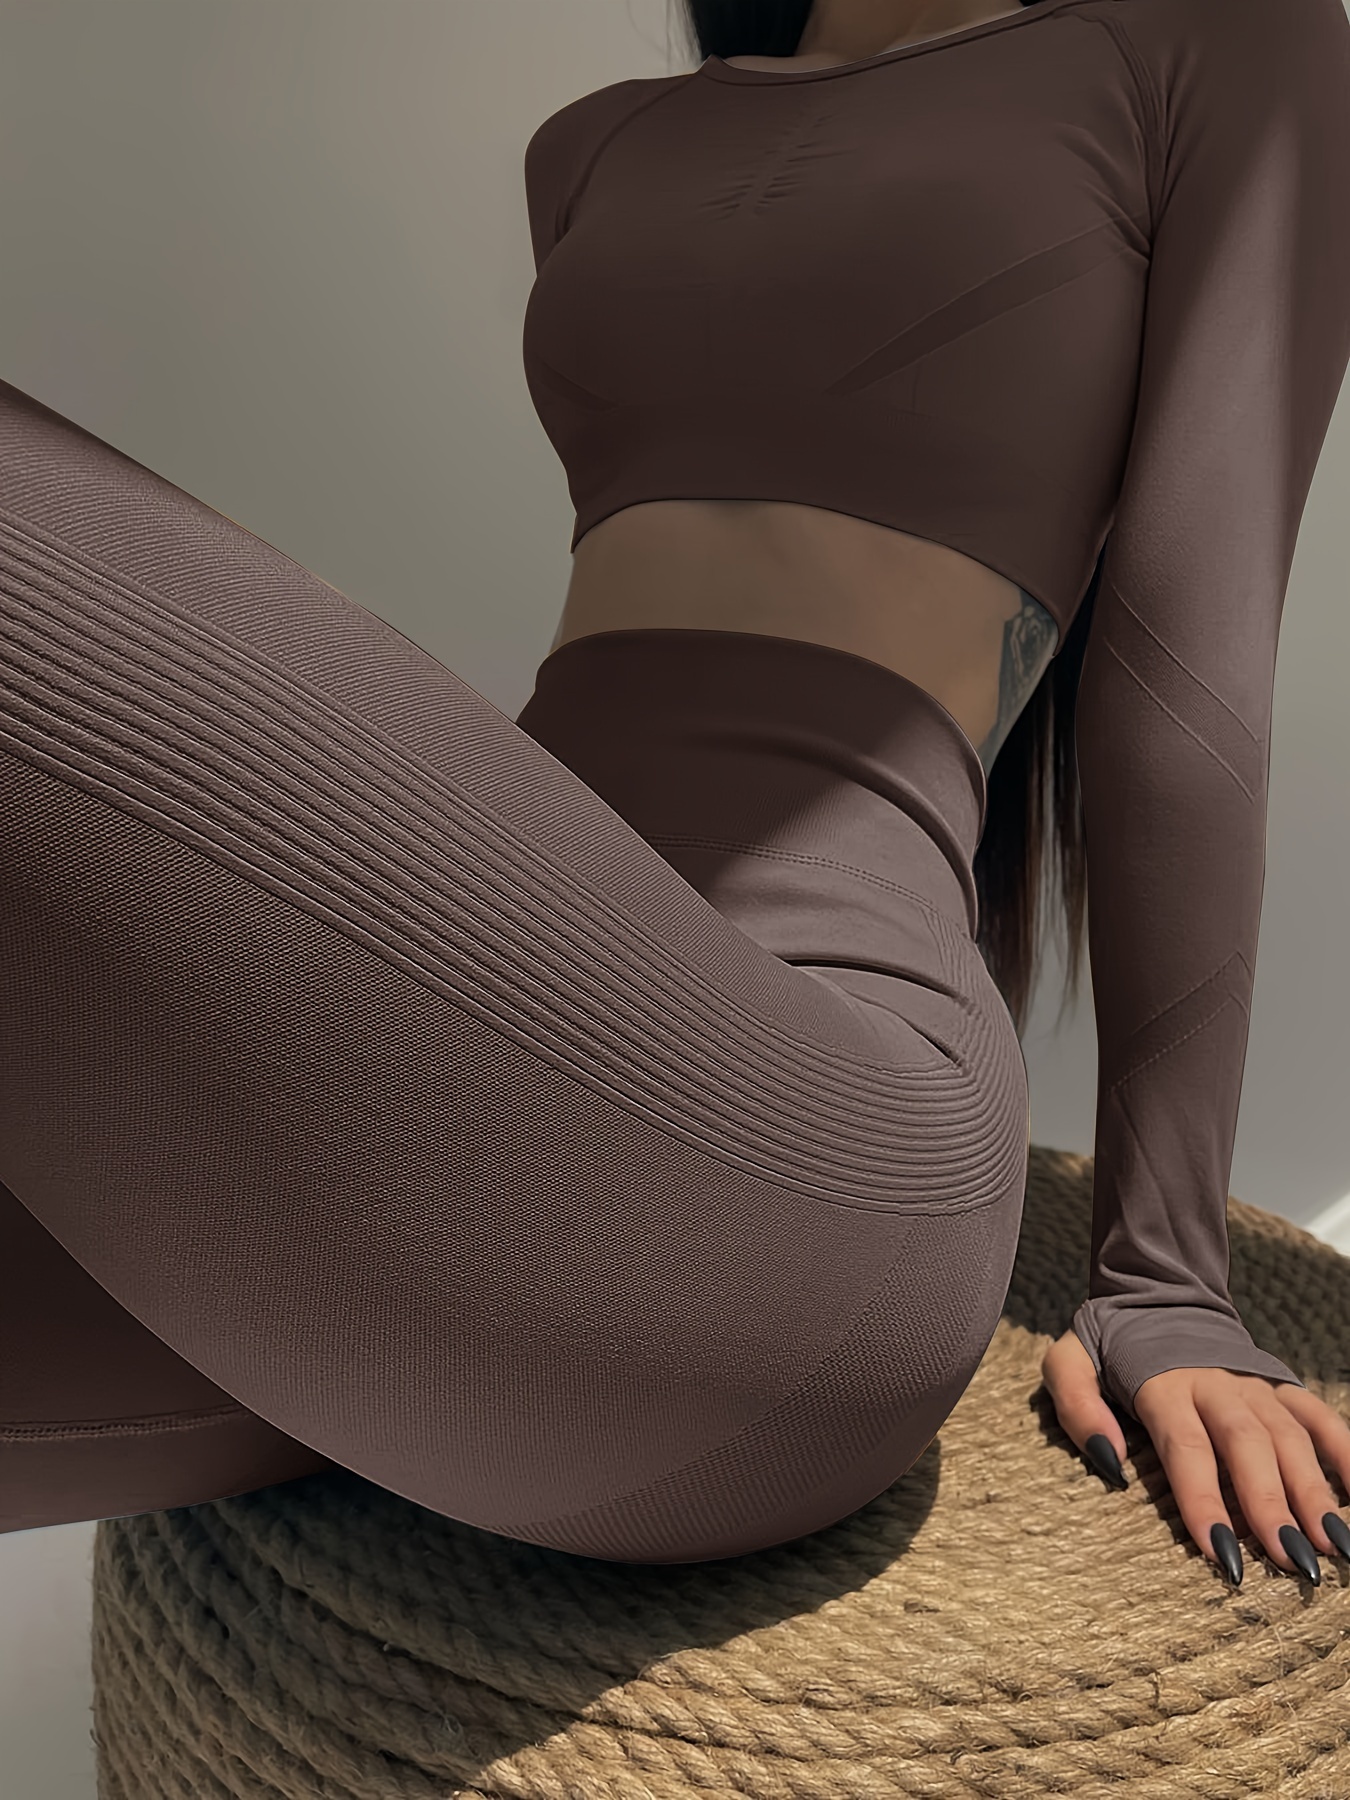 Rugkey Scrunch Butt Lift Leggings for Women Tie Dye High Waist